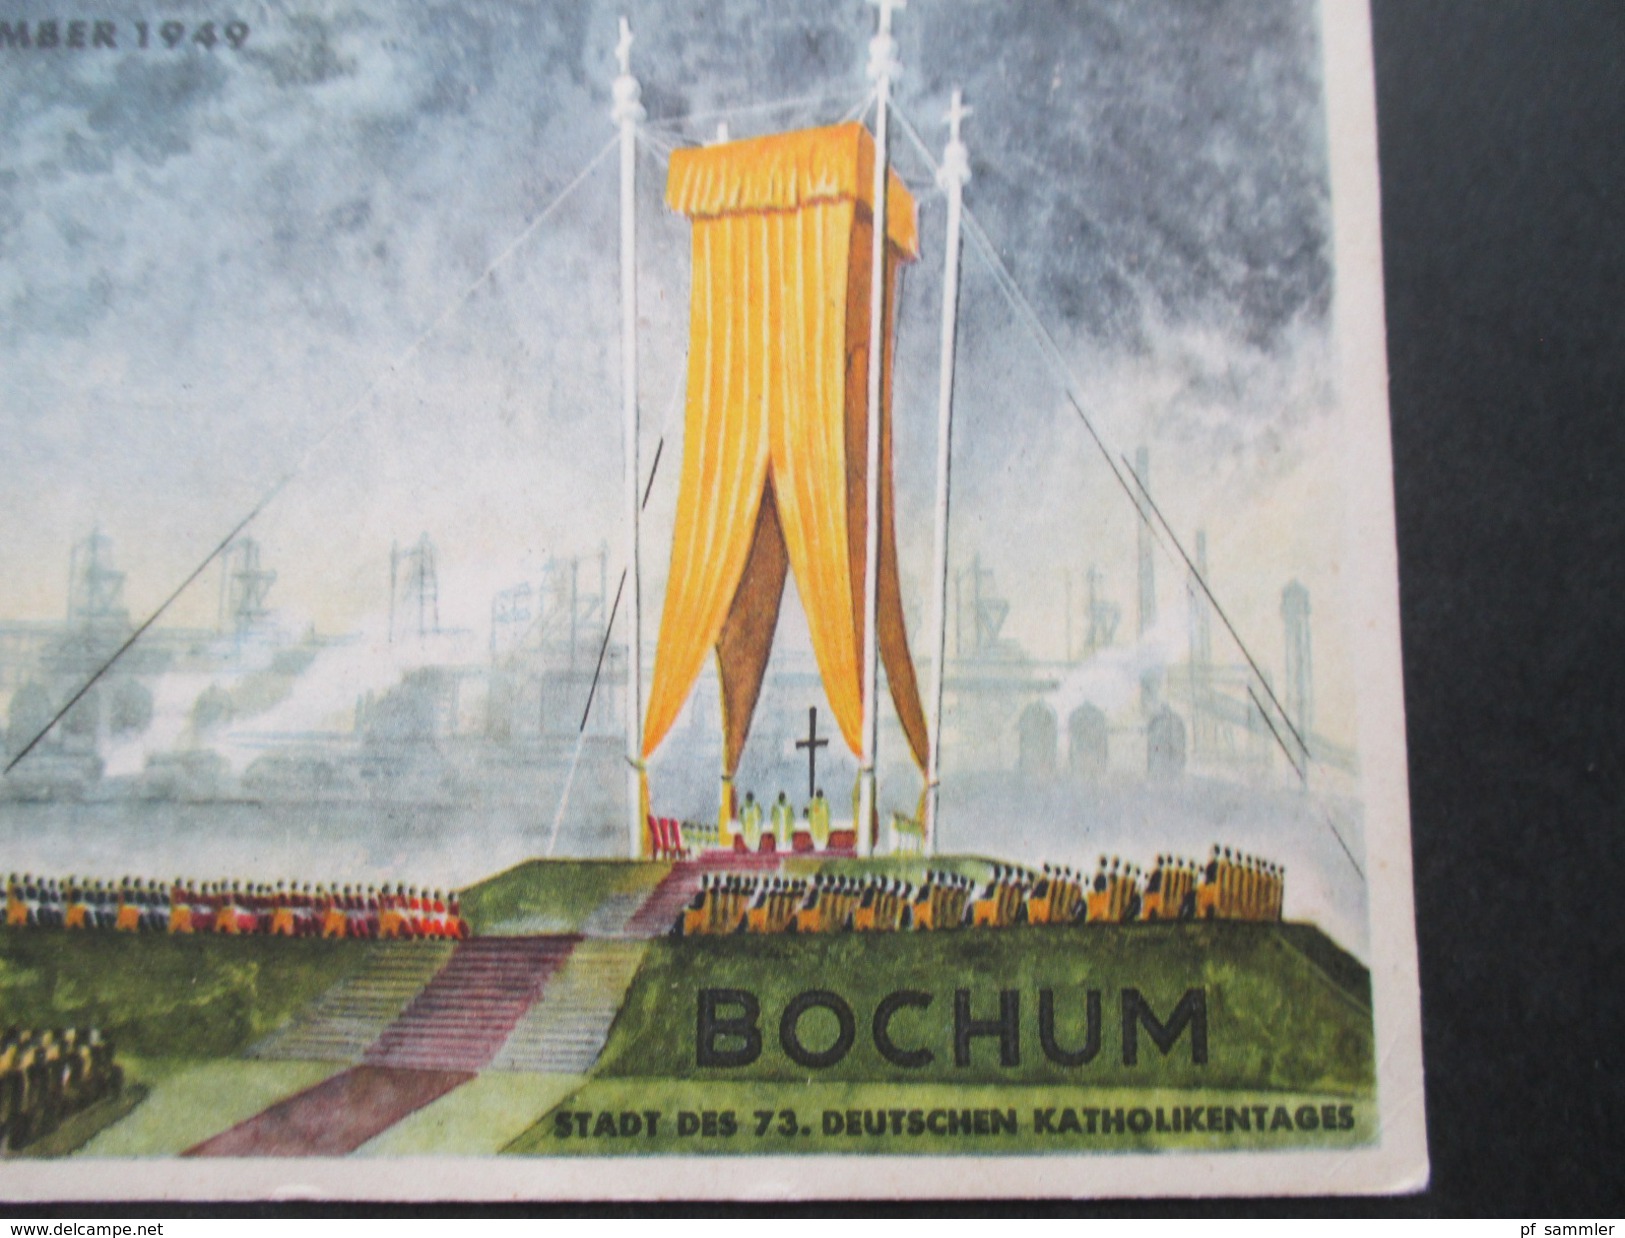 AK / Künstlerkarte Bochum Stadt Des 73. Deutschen Katholikentages. 1. - 4. September. 1949 Aquarell Kurt Hubert Vieth. - Christendom